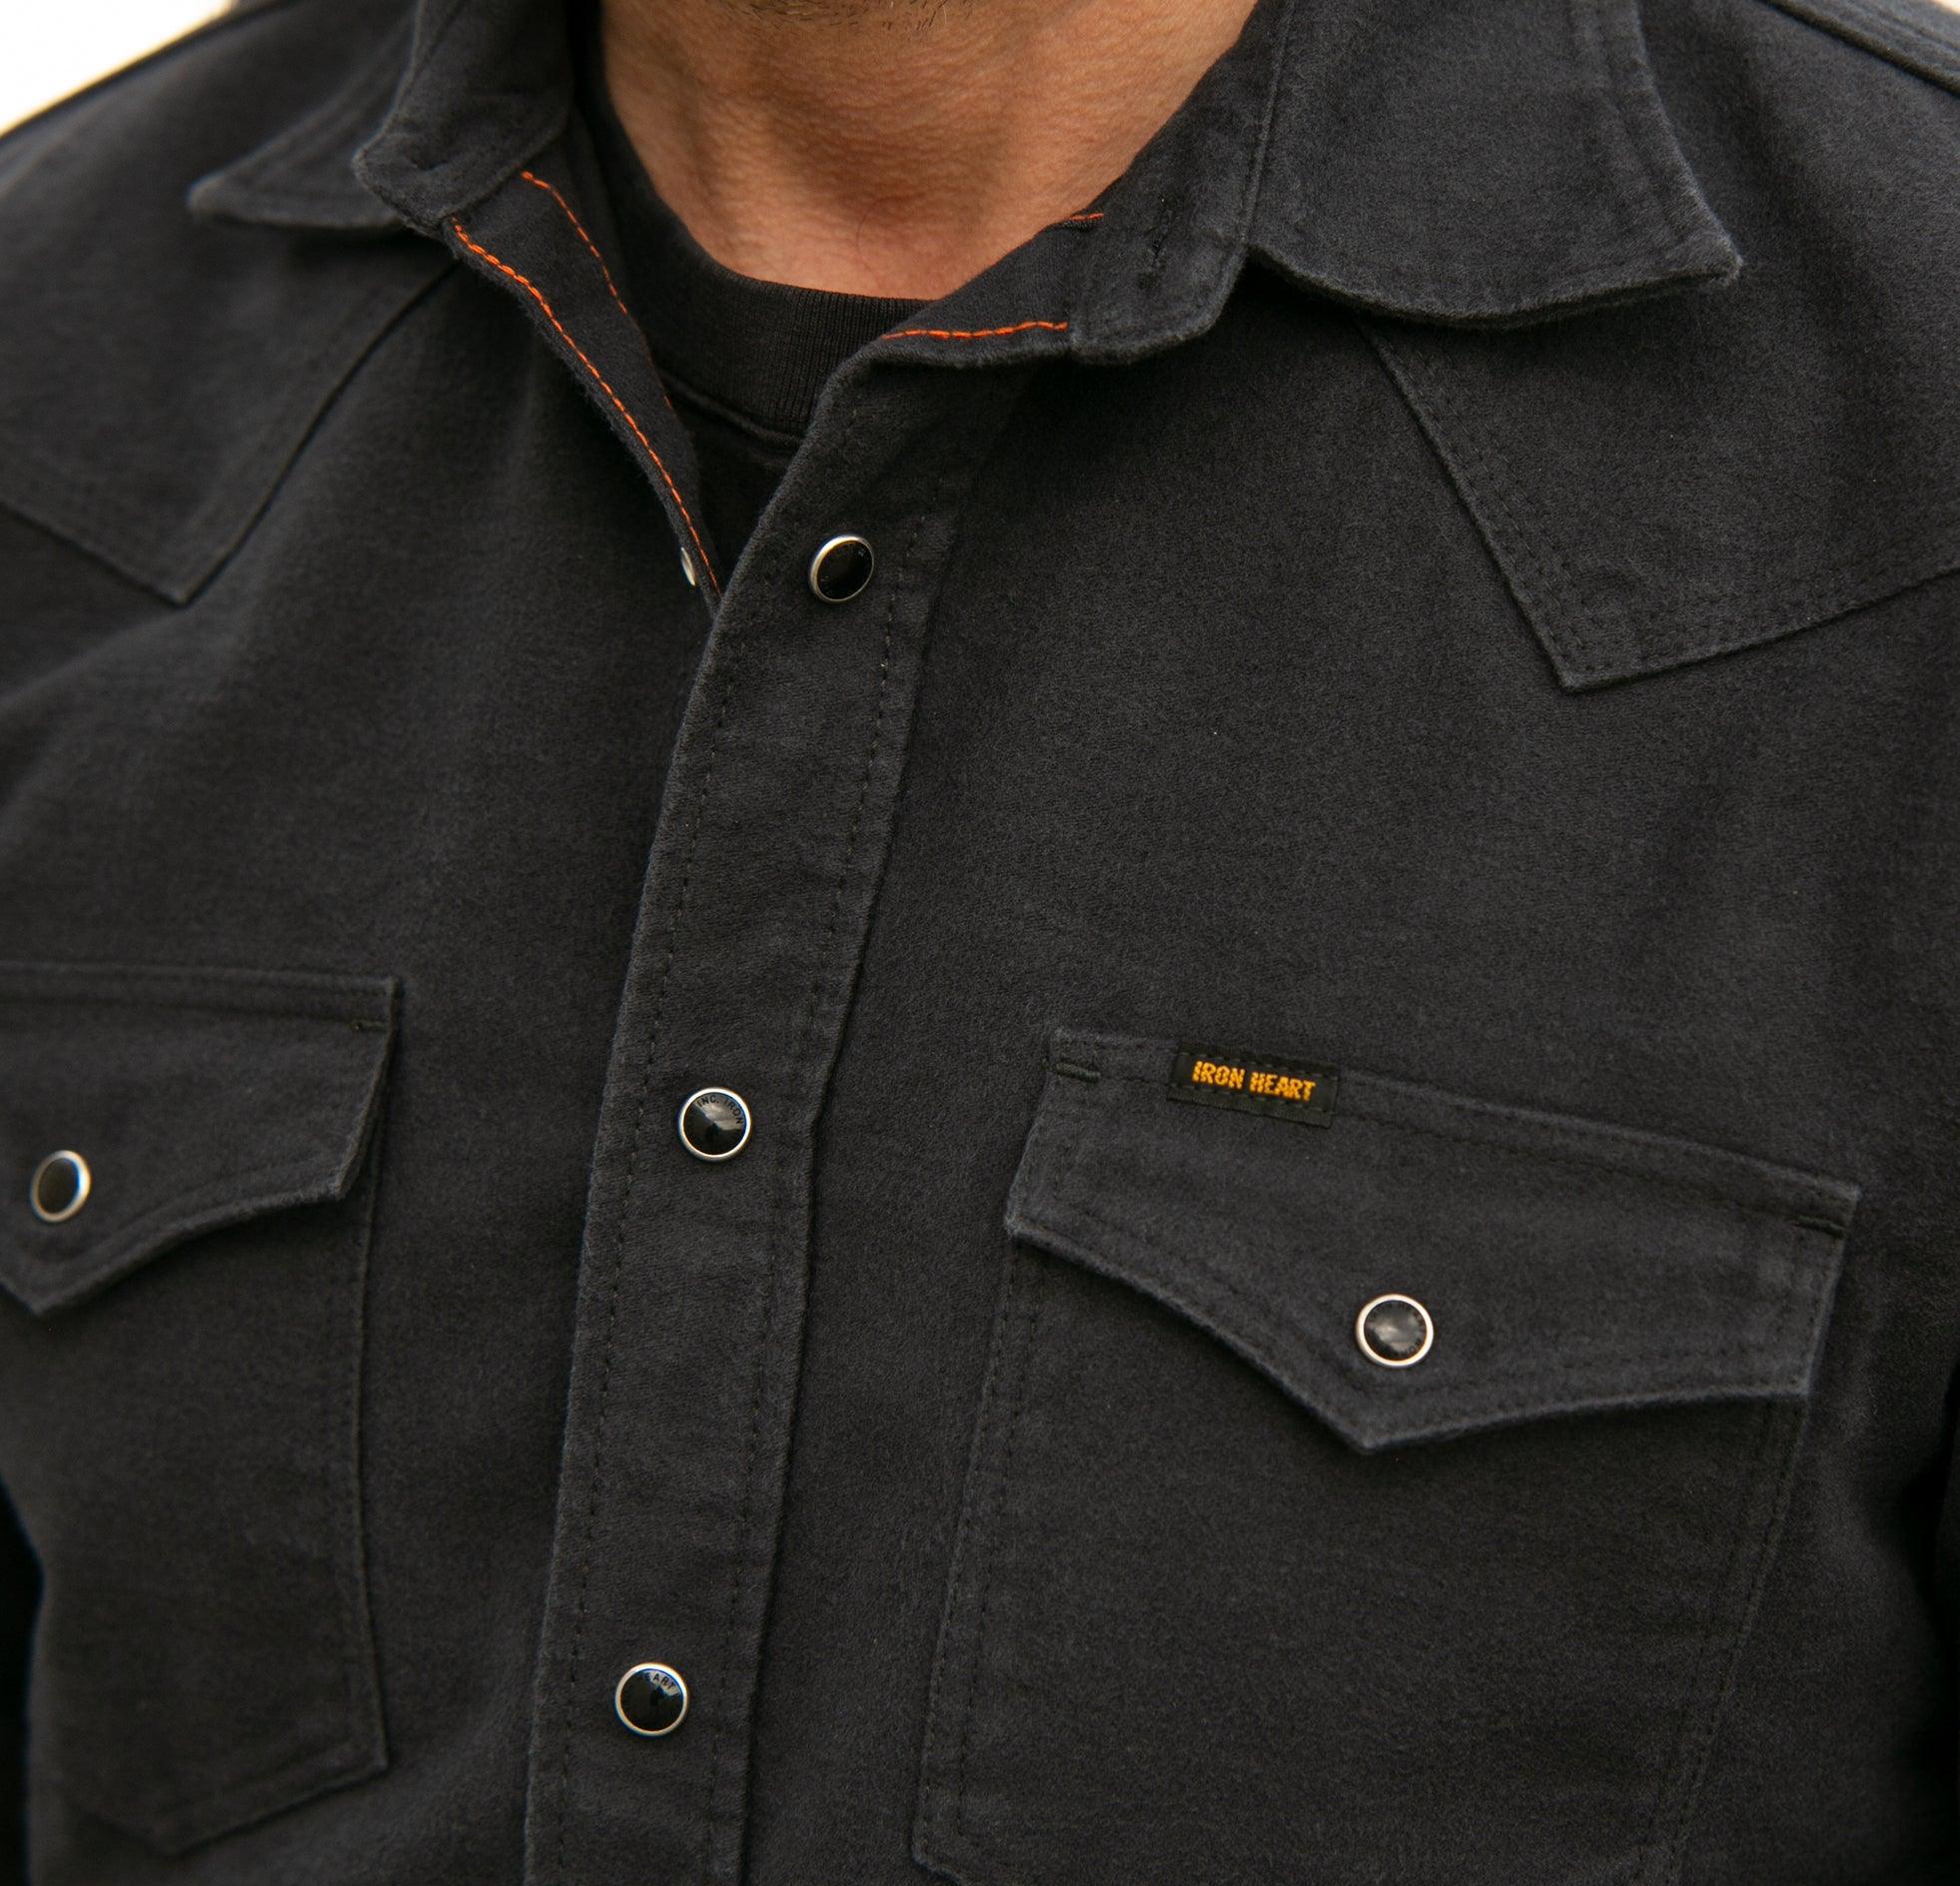 IHSH-330-BLK - 9oz Raised Whipcord Western Shirt - Black